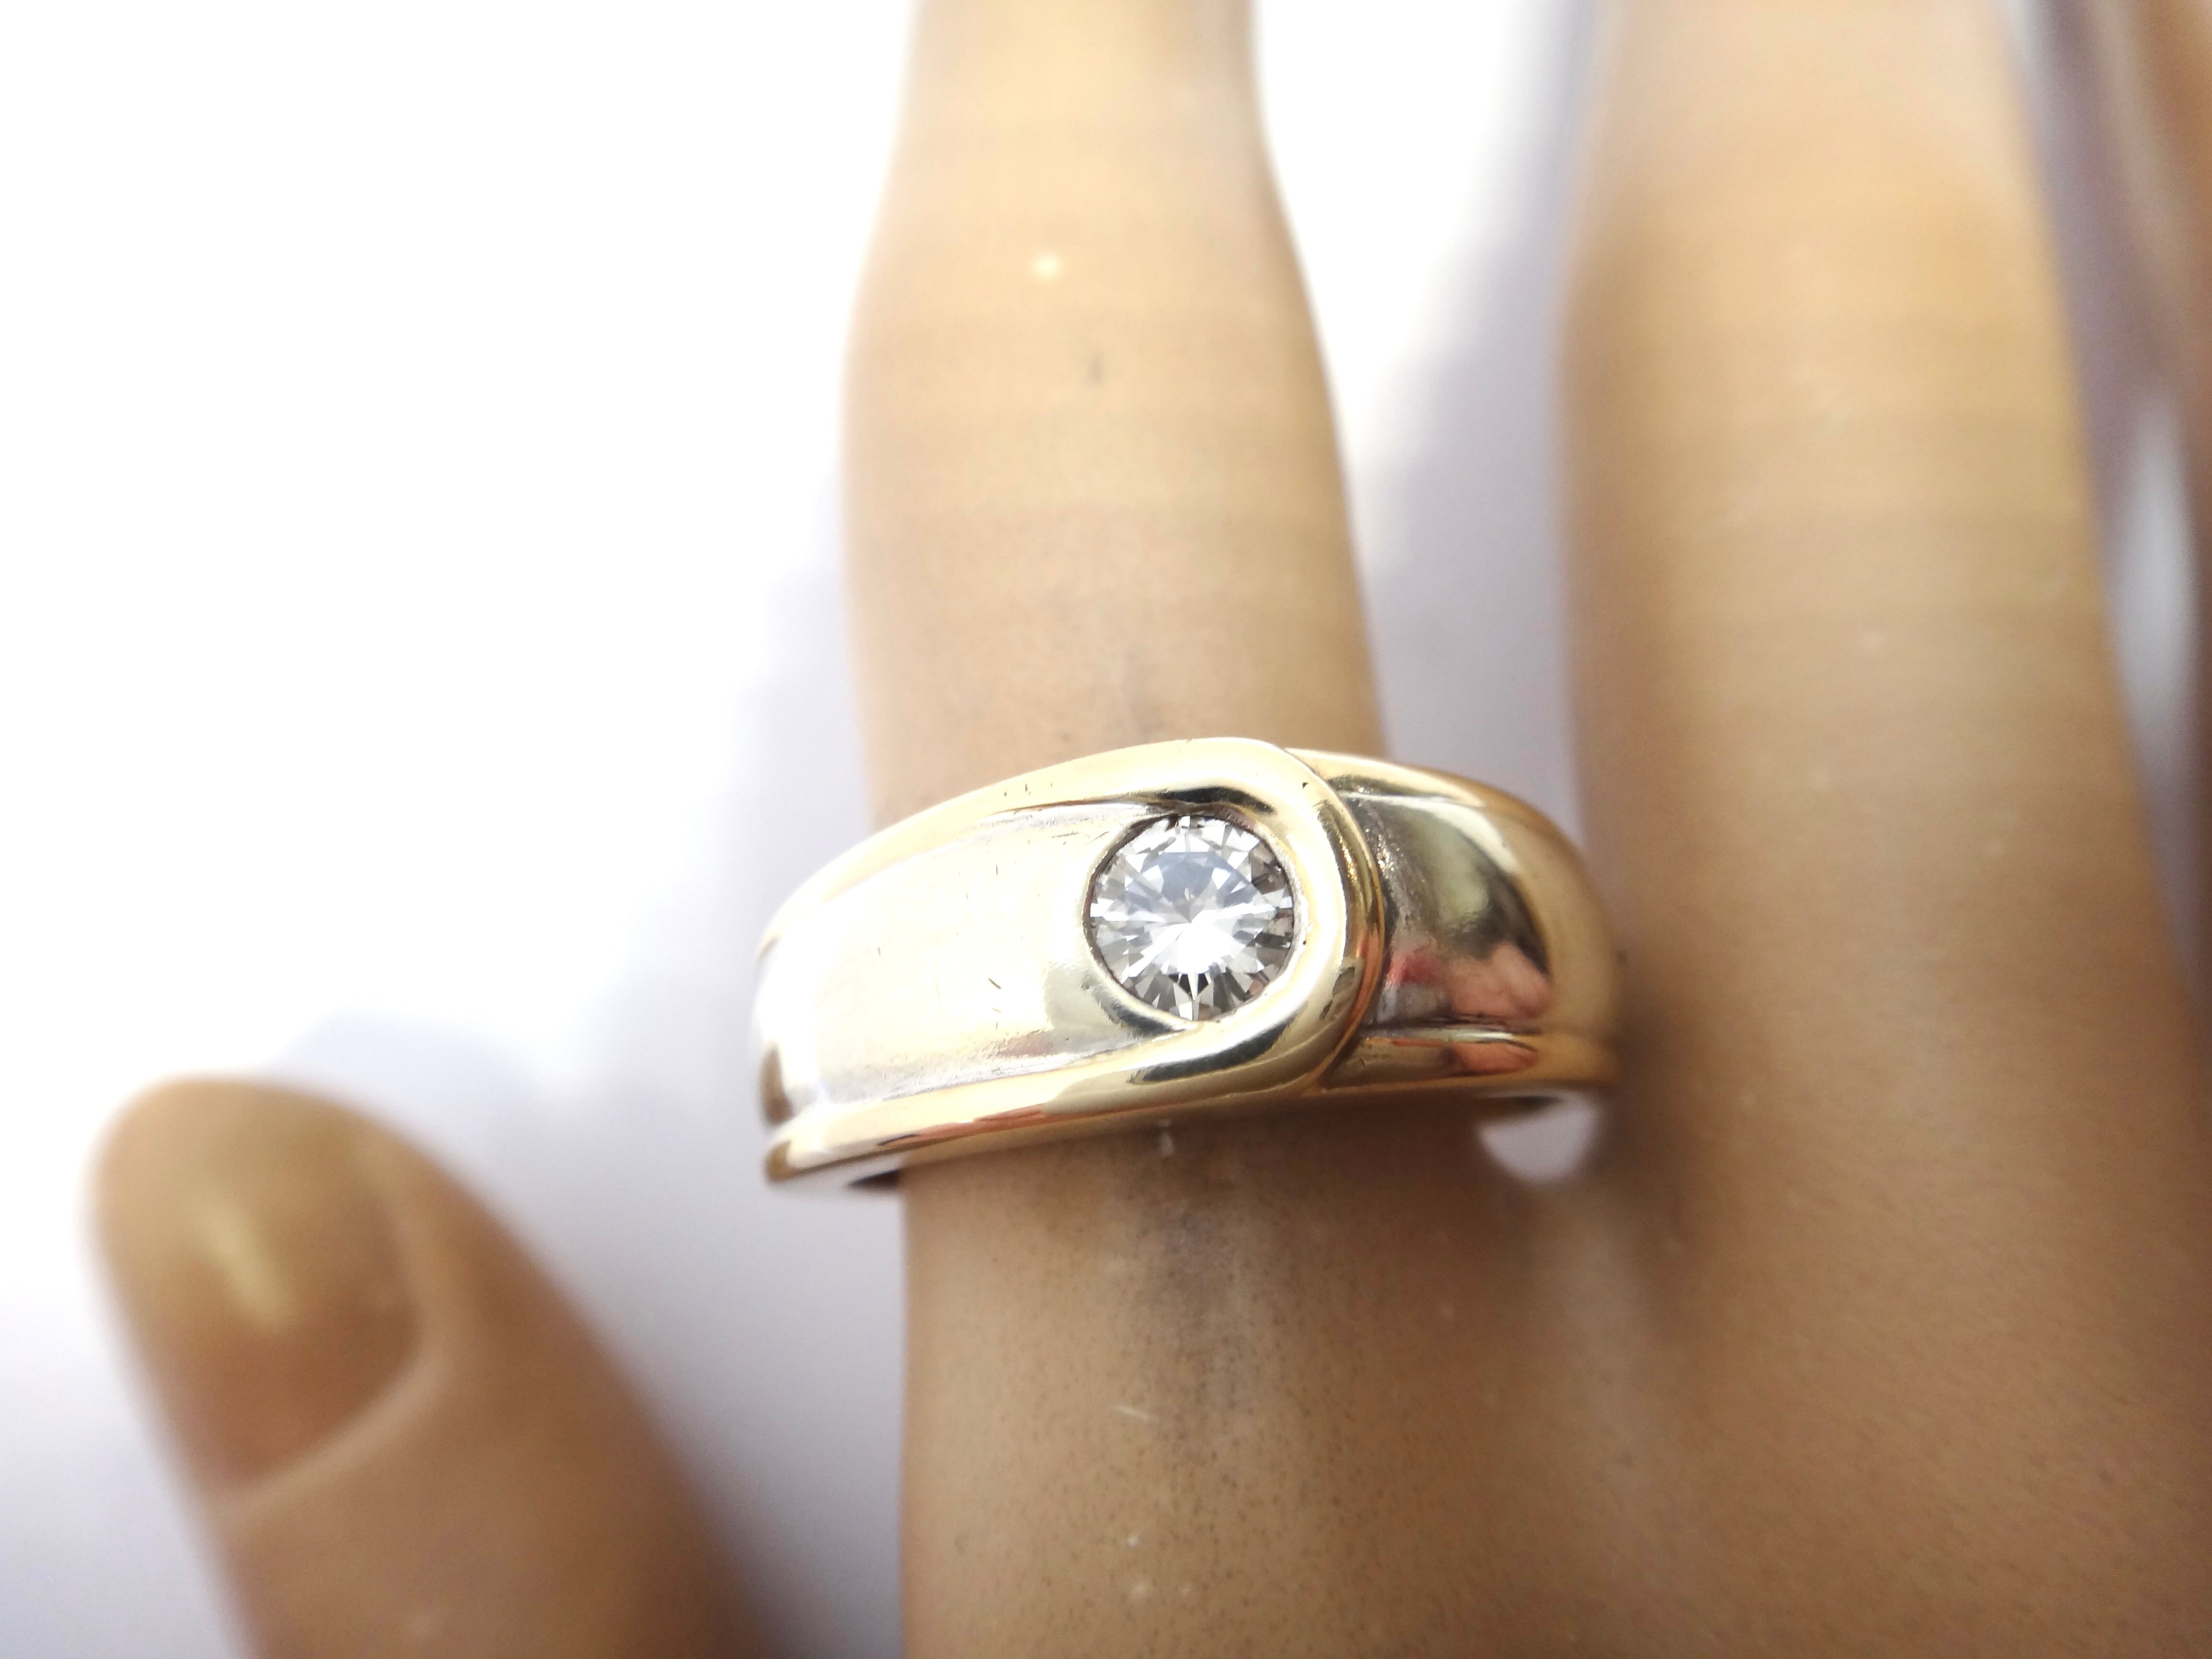 Mens 9ct Gold & DIAMOND Ring